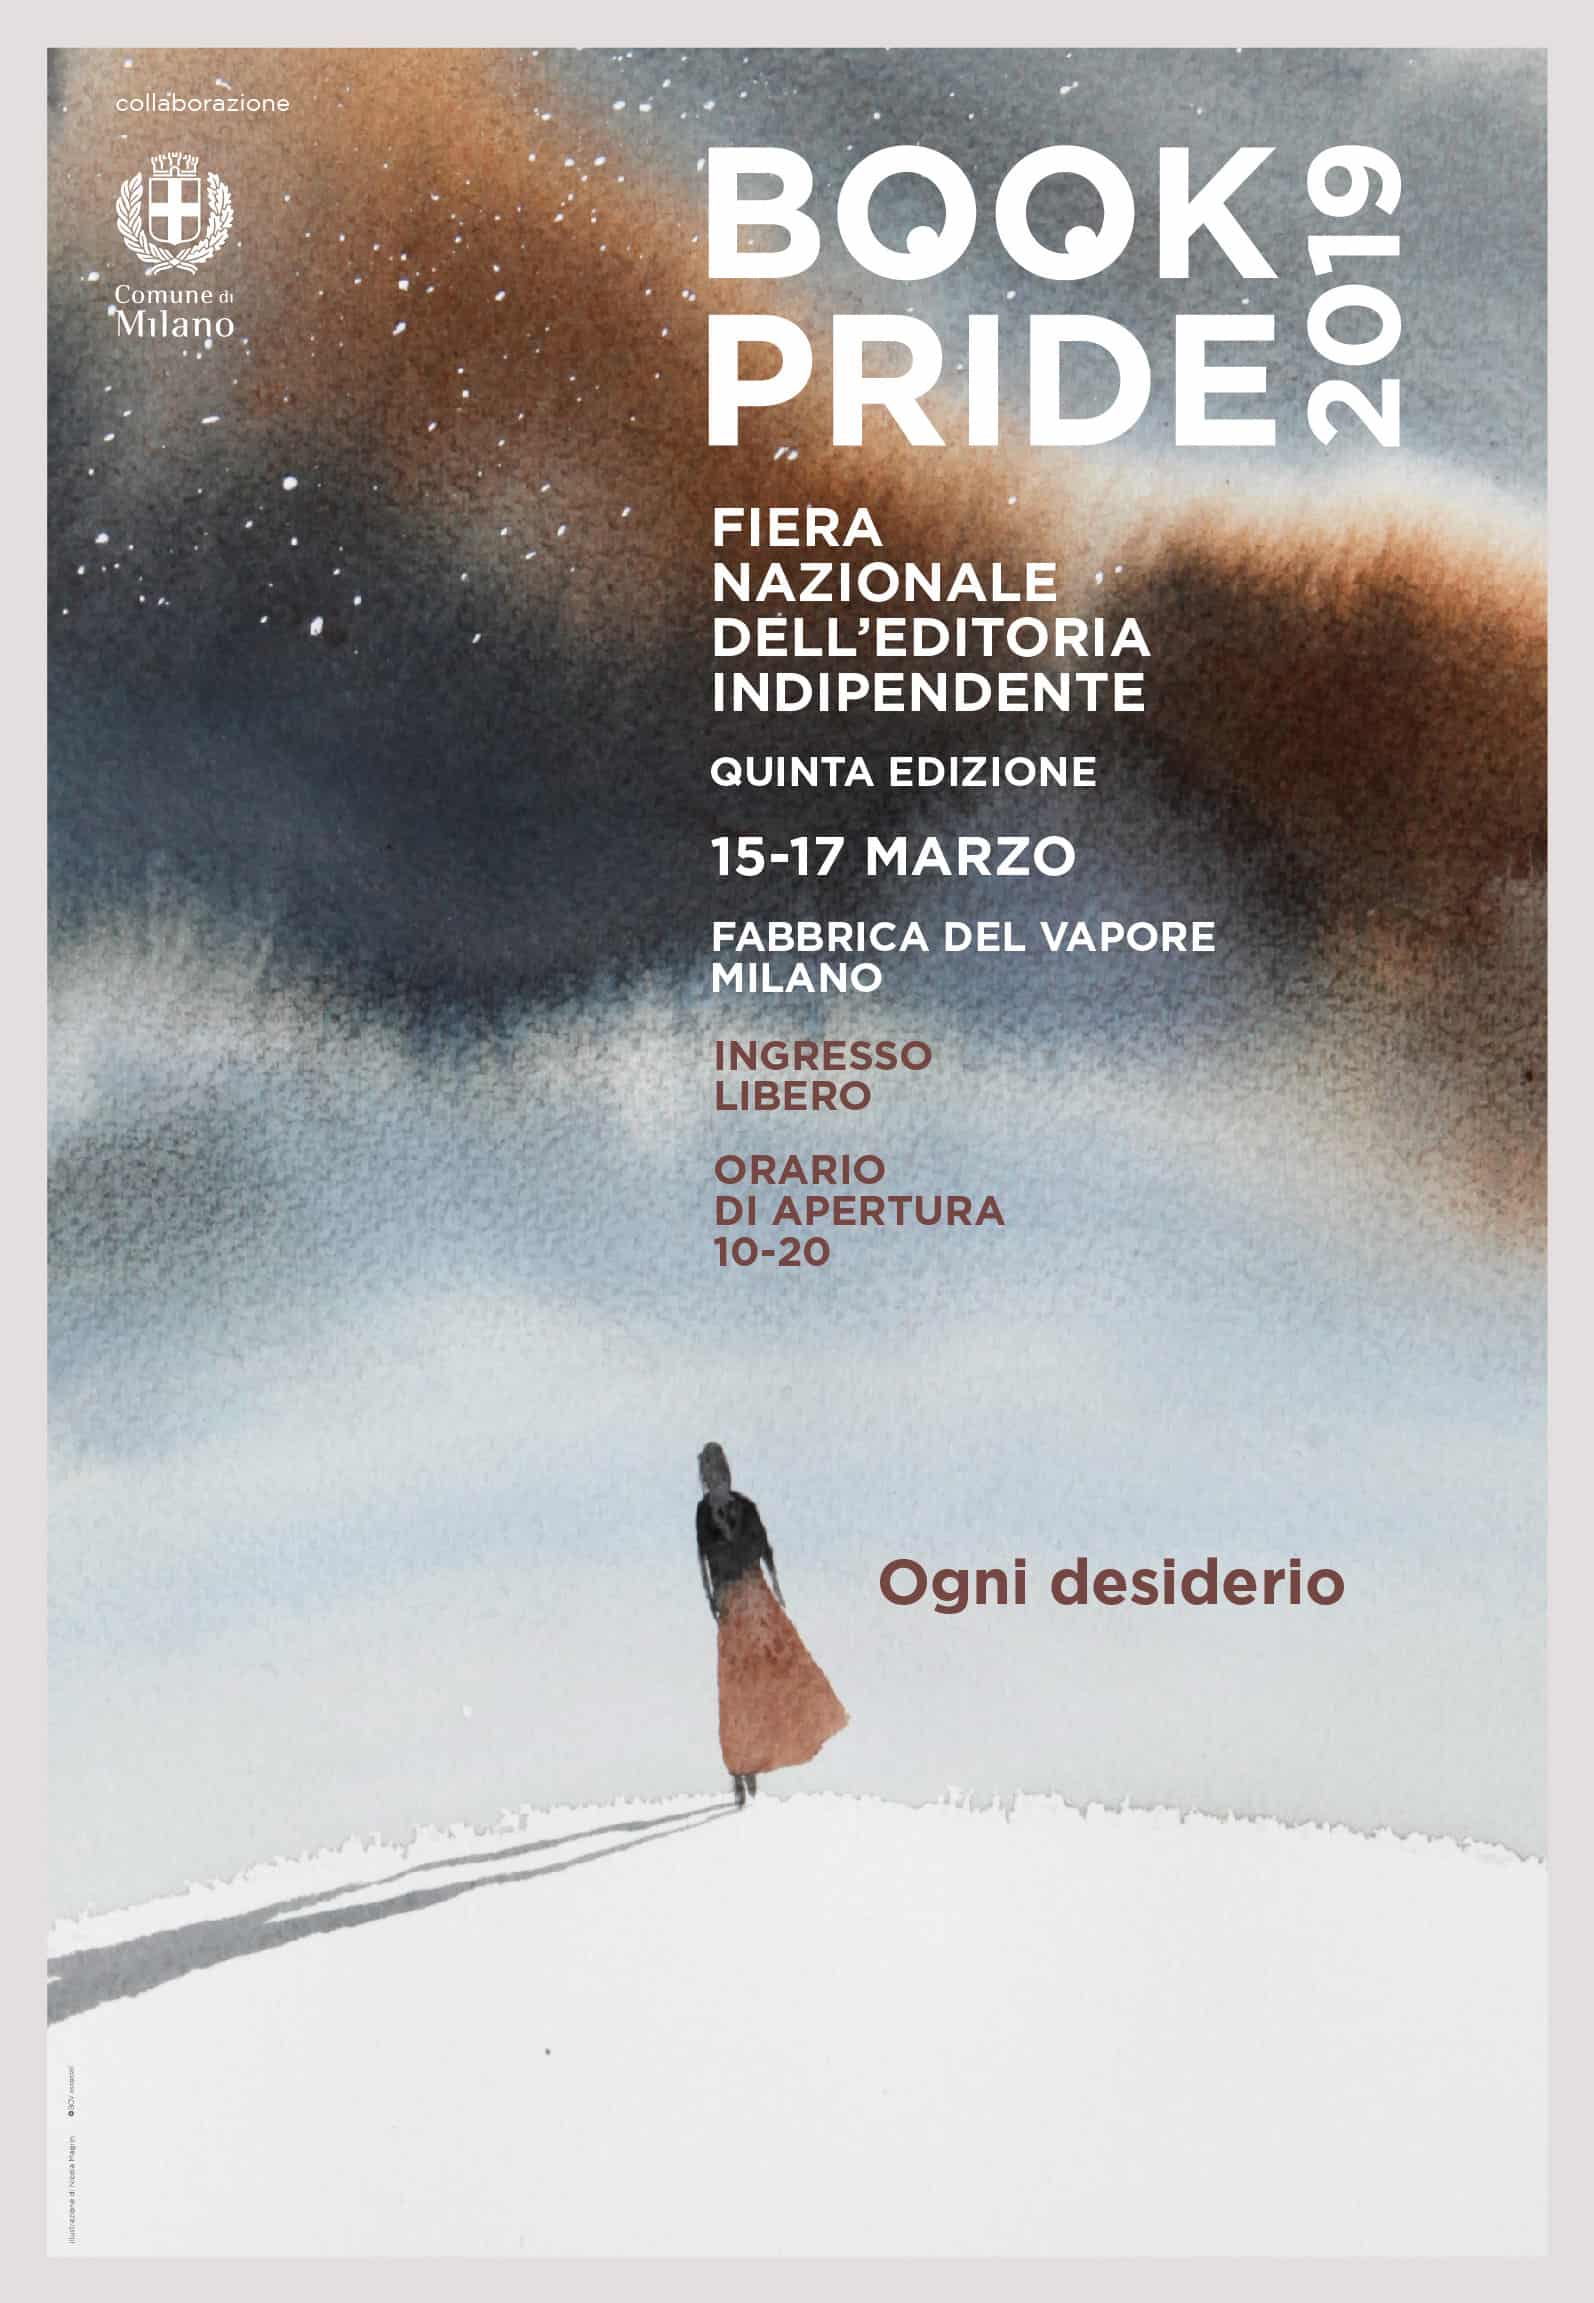 Book pride 2019, Locandina illustrata da Nicola Magrin